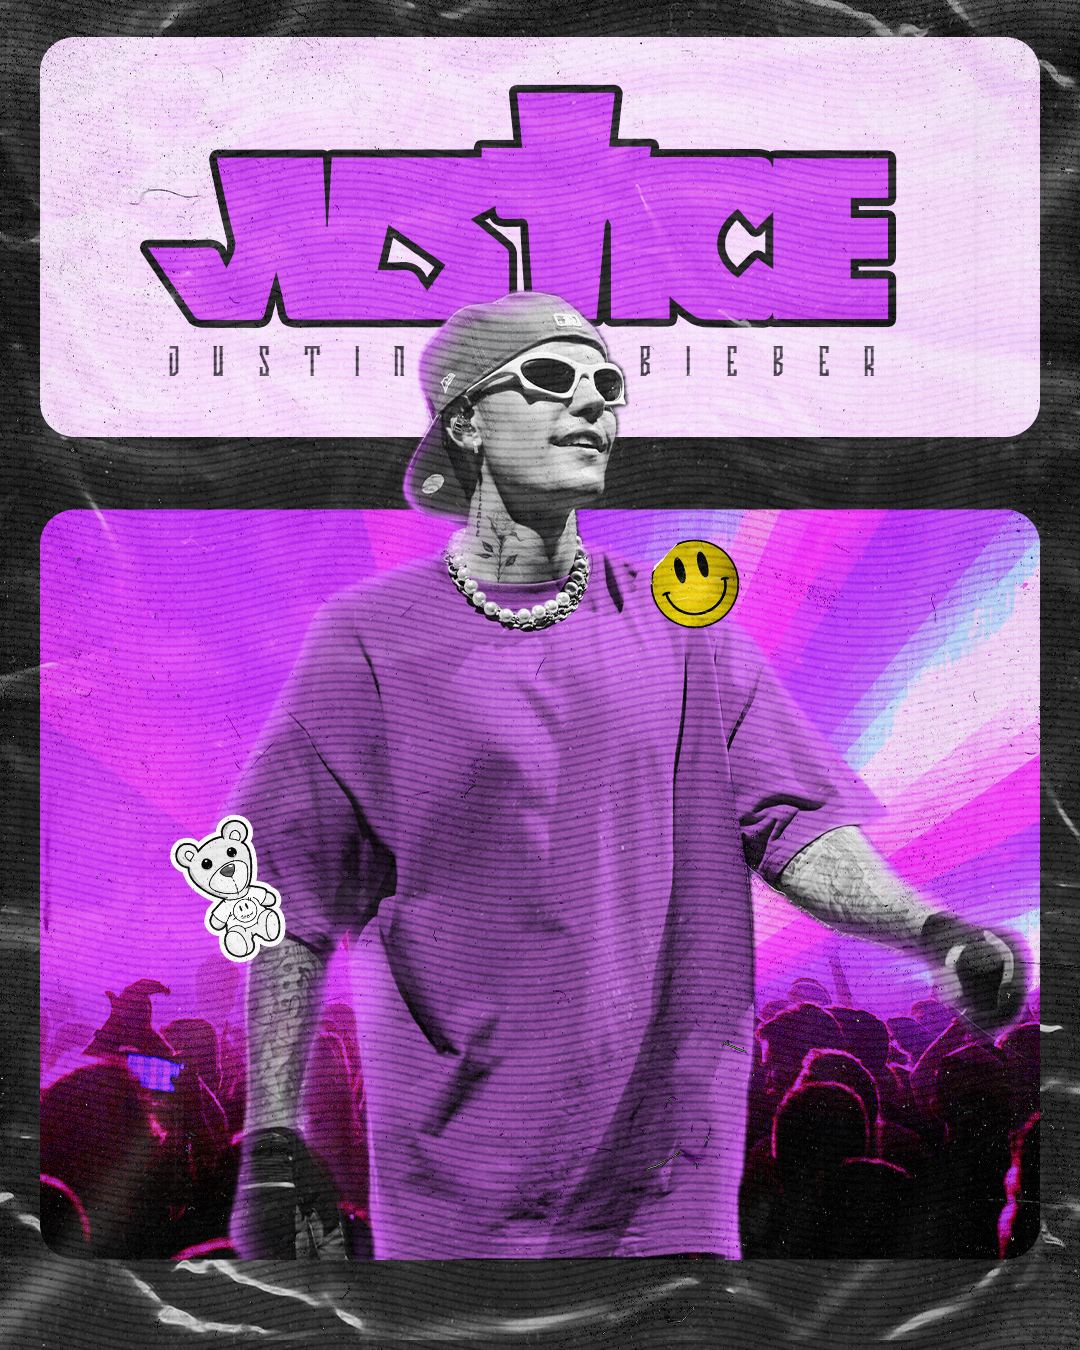 justice tour annullato